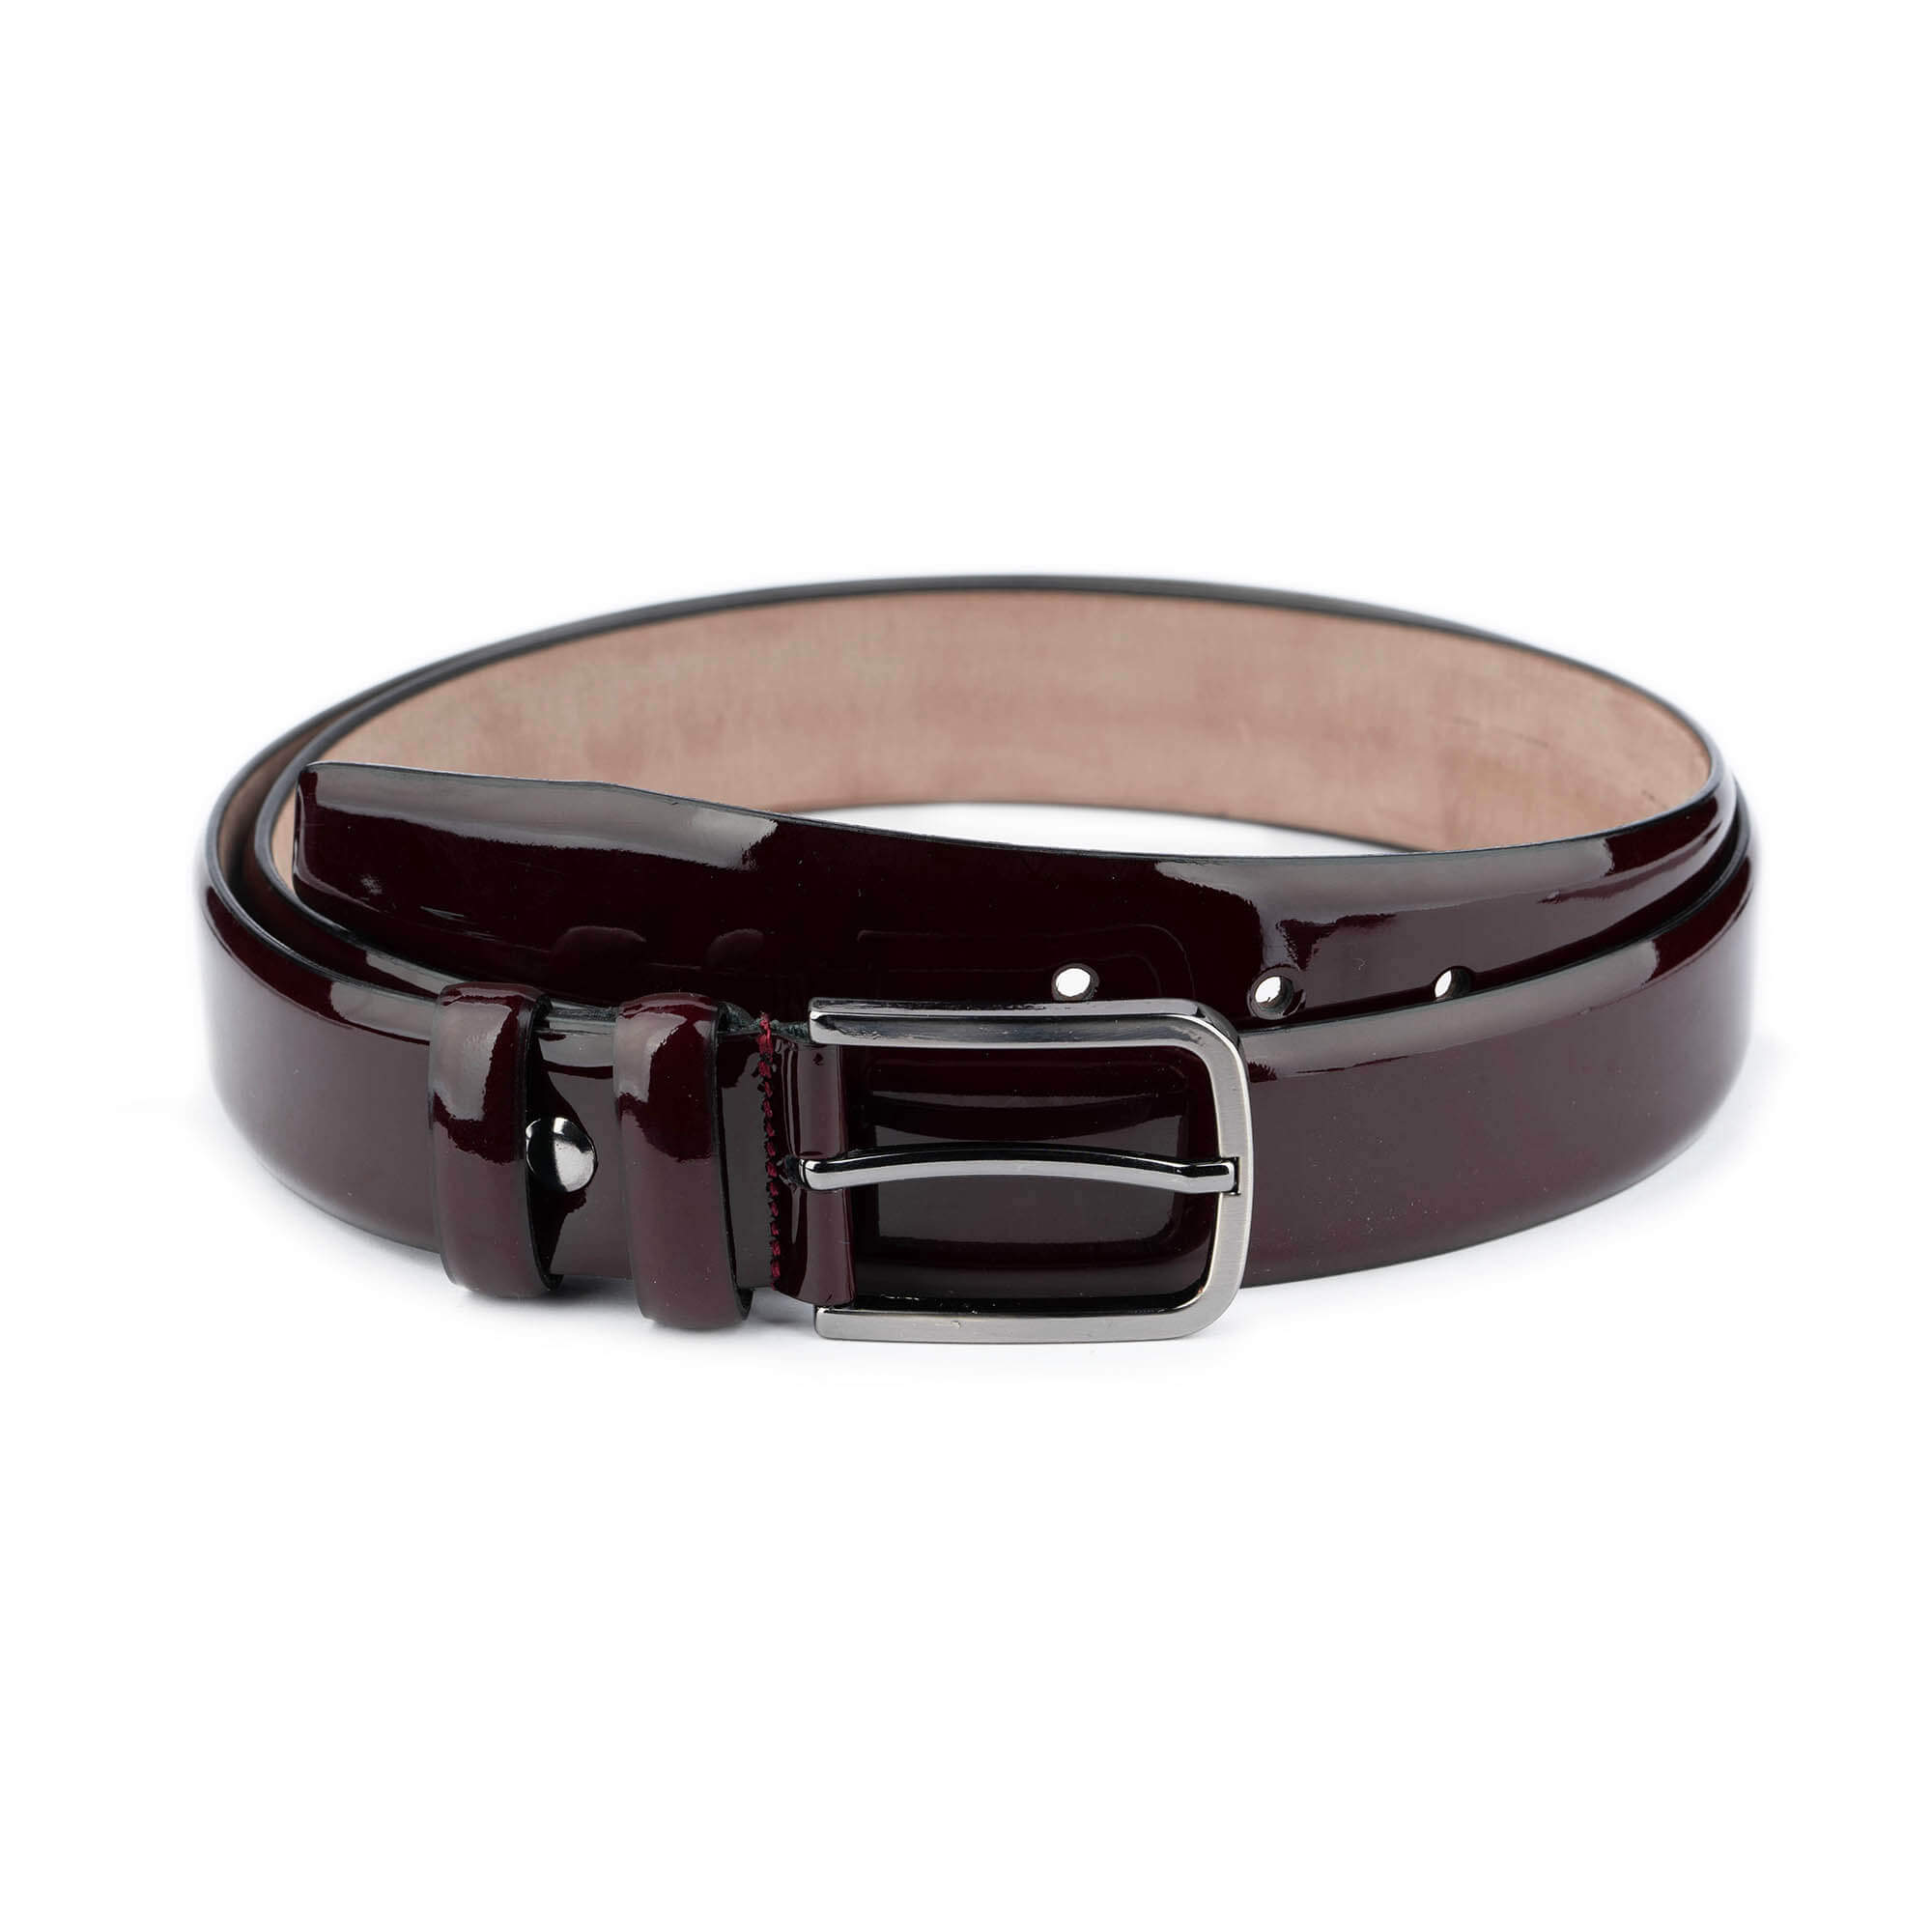 Light Tan Mens Belt | Soft Italian Leather 42 / 105 cm - Brown | Capo Pelle